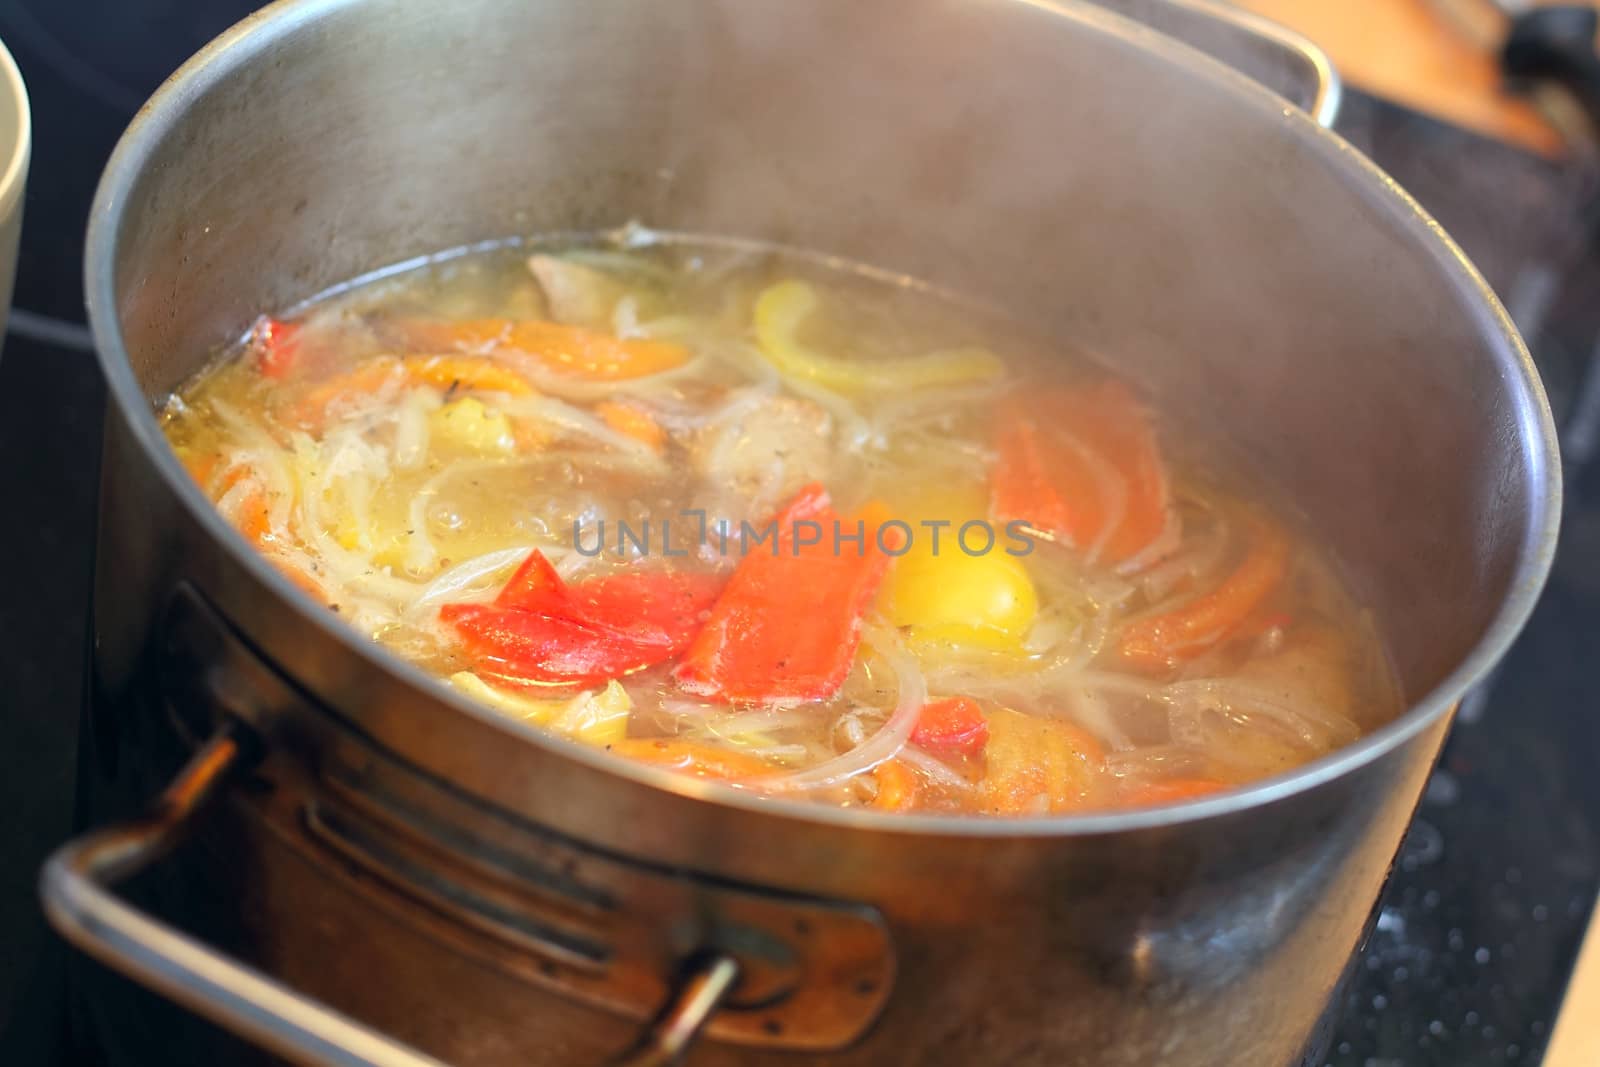 Soup in the saucepan by dedmorozz